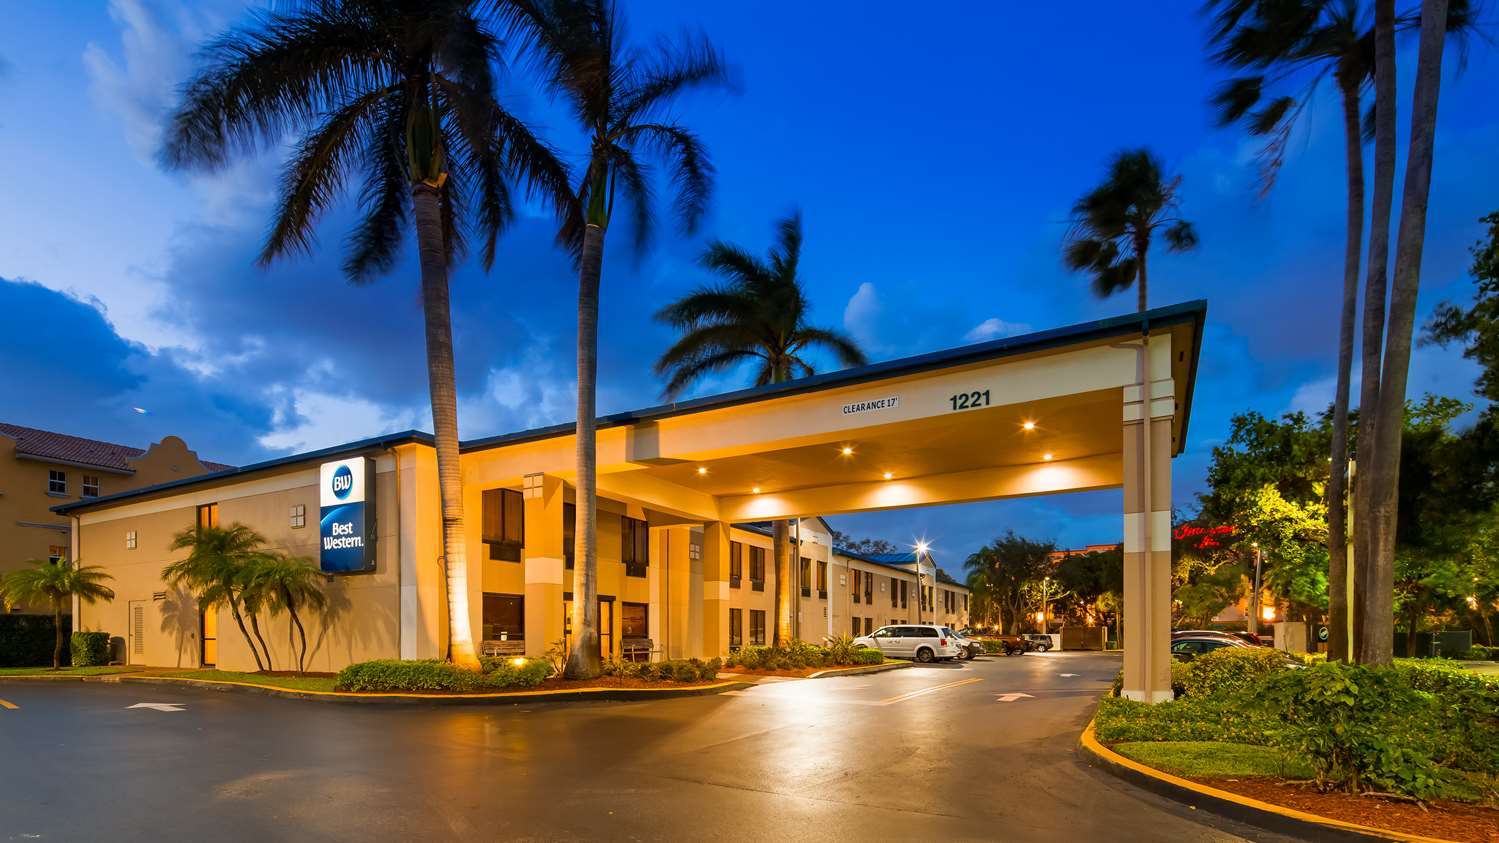 Hotels near Port Everglades Florida Cruise Terminals ...